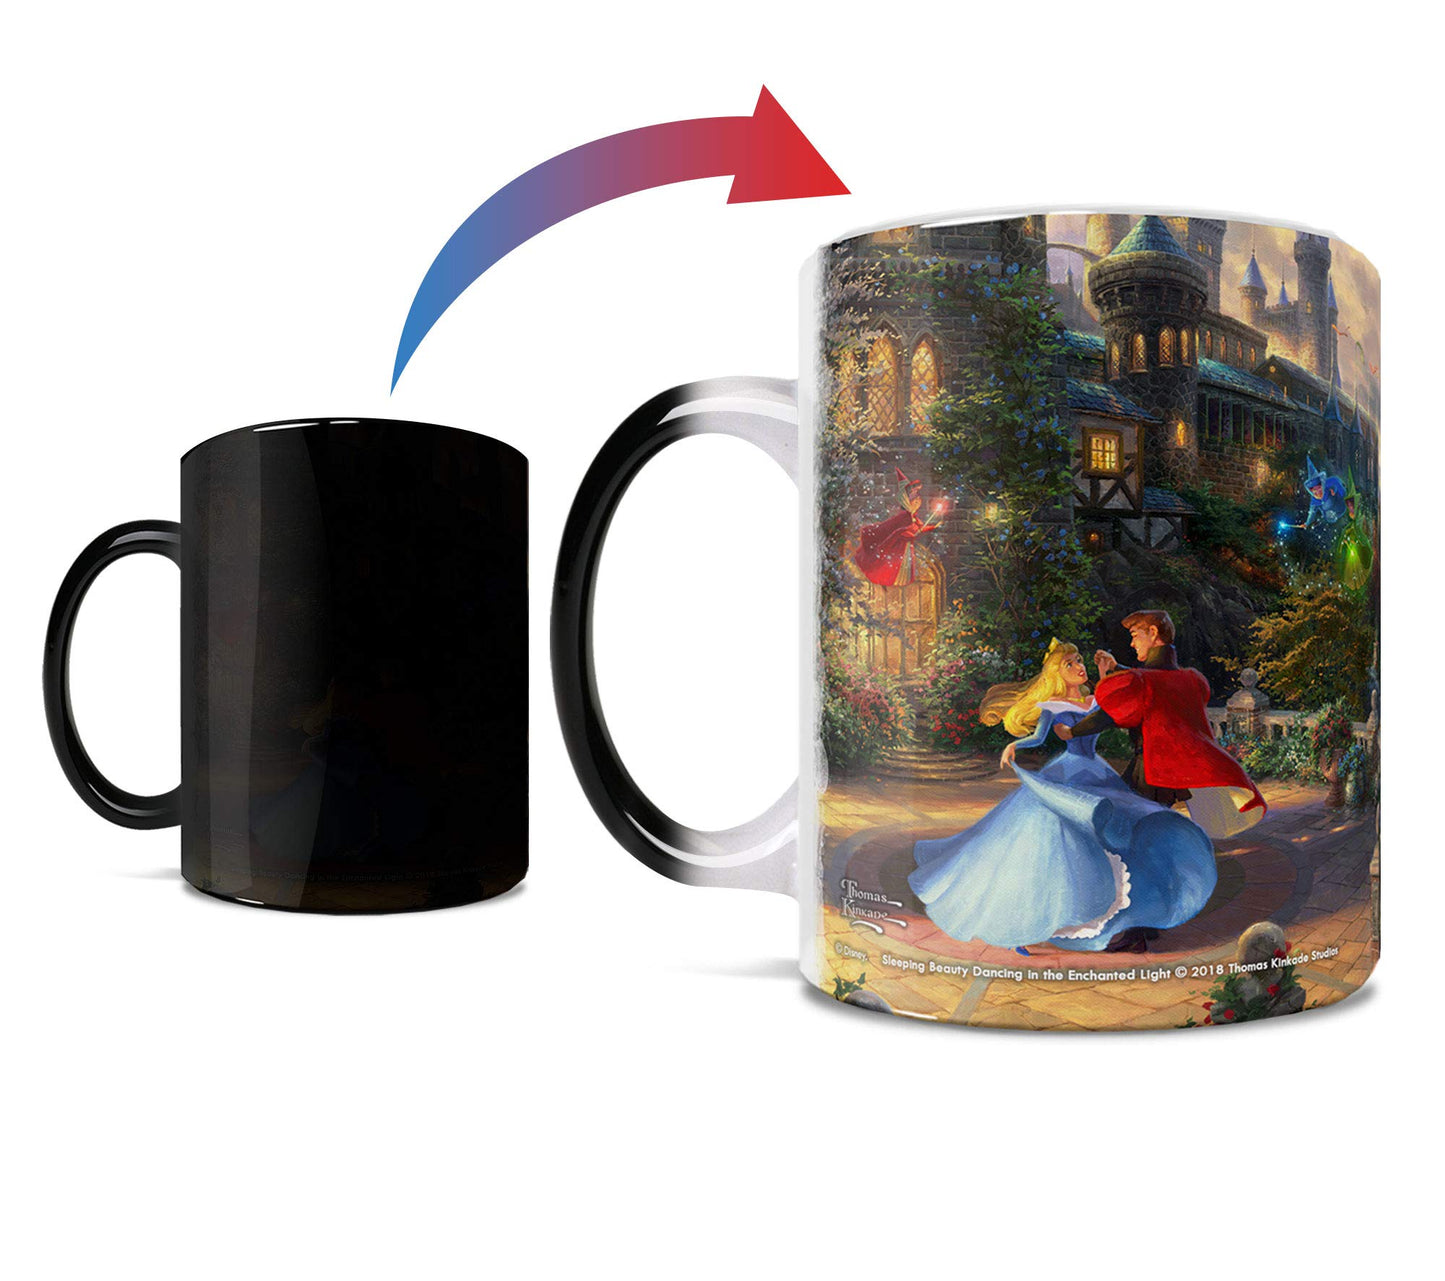 Disney - Sleeping Beauty - Morphing Mugs Heat Sensitive Mug – Image revealed when HOT liquid is added - 11oz Large Drinkware